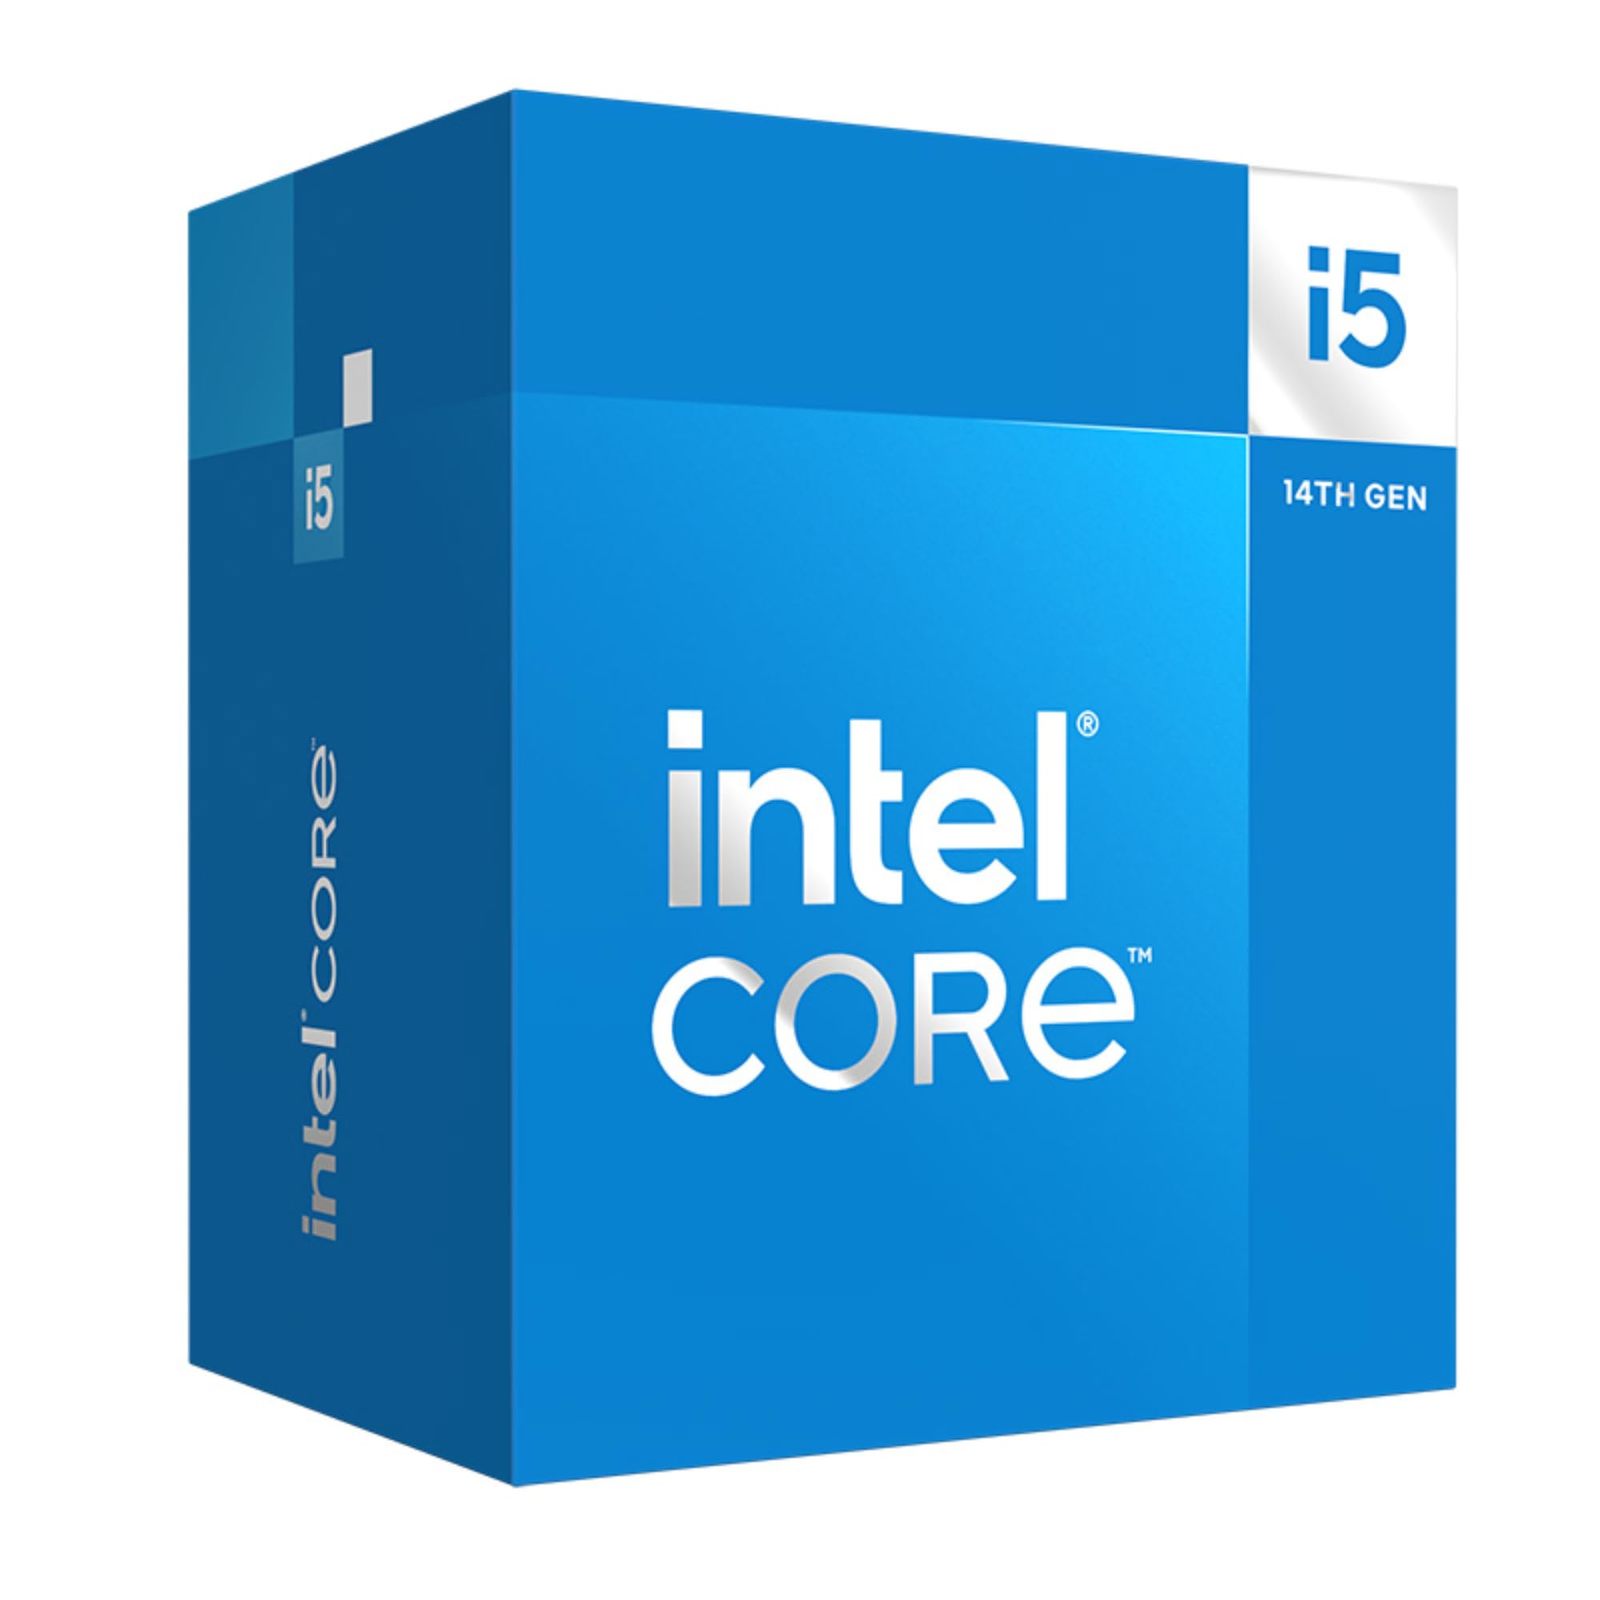 Intel Core i5-14400 Desktop Processor 10 cores (6 P-cores + 4 E-cores) up to 4.7 - $333.83